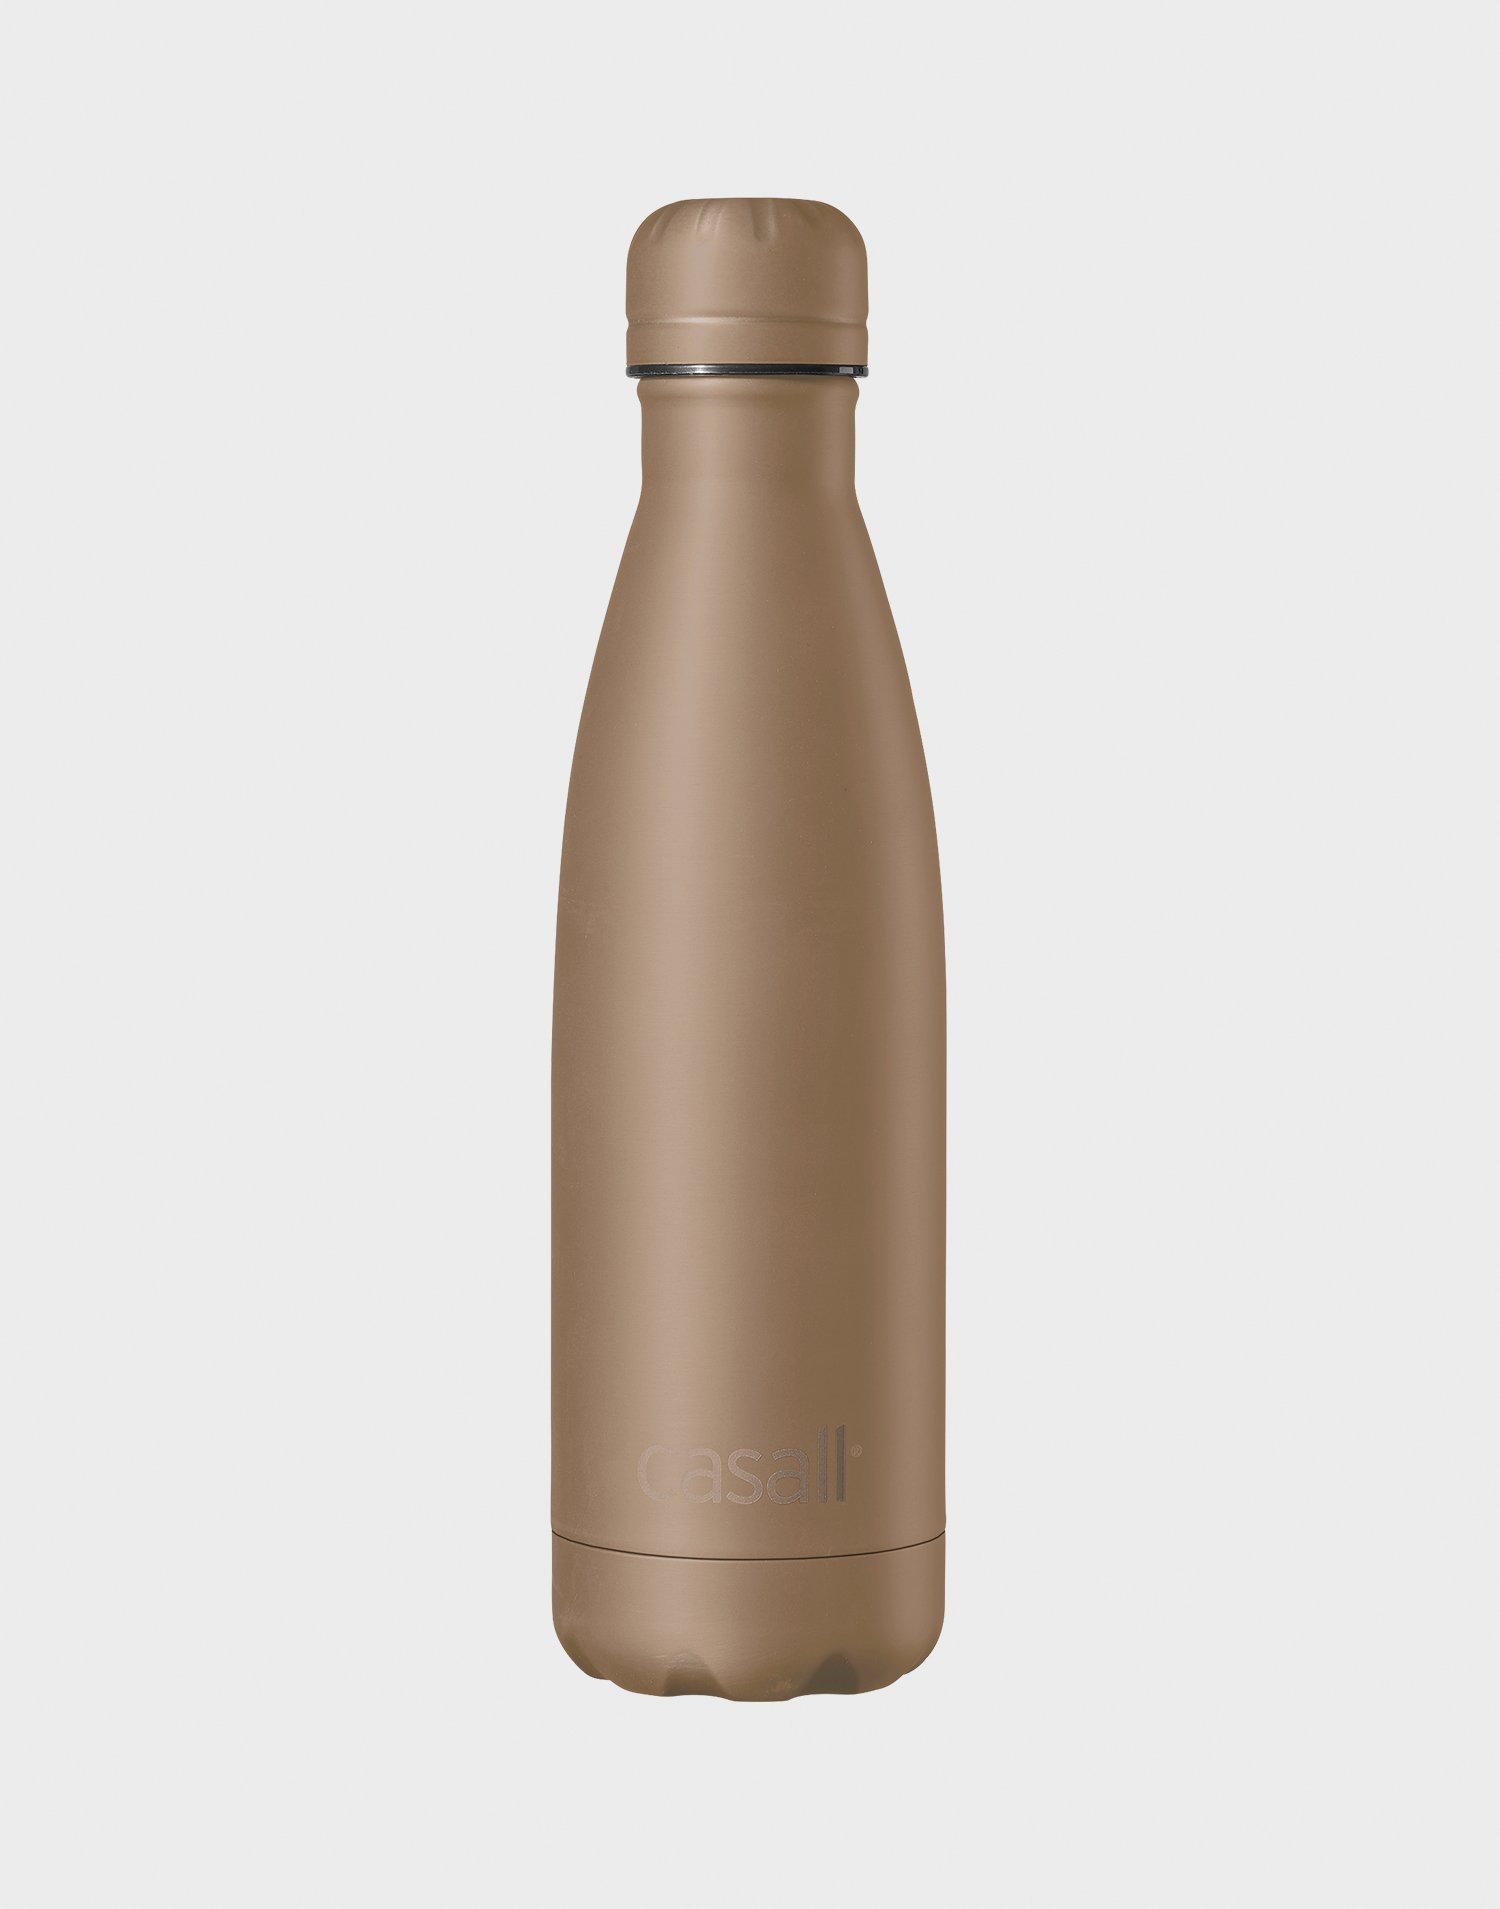 Casall - Treeniasusteet - Brown - ECO Cold Bottle 0,5l - Treeniasusteet product